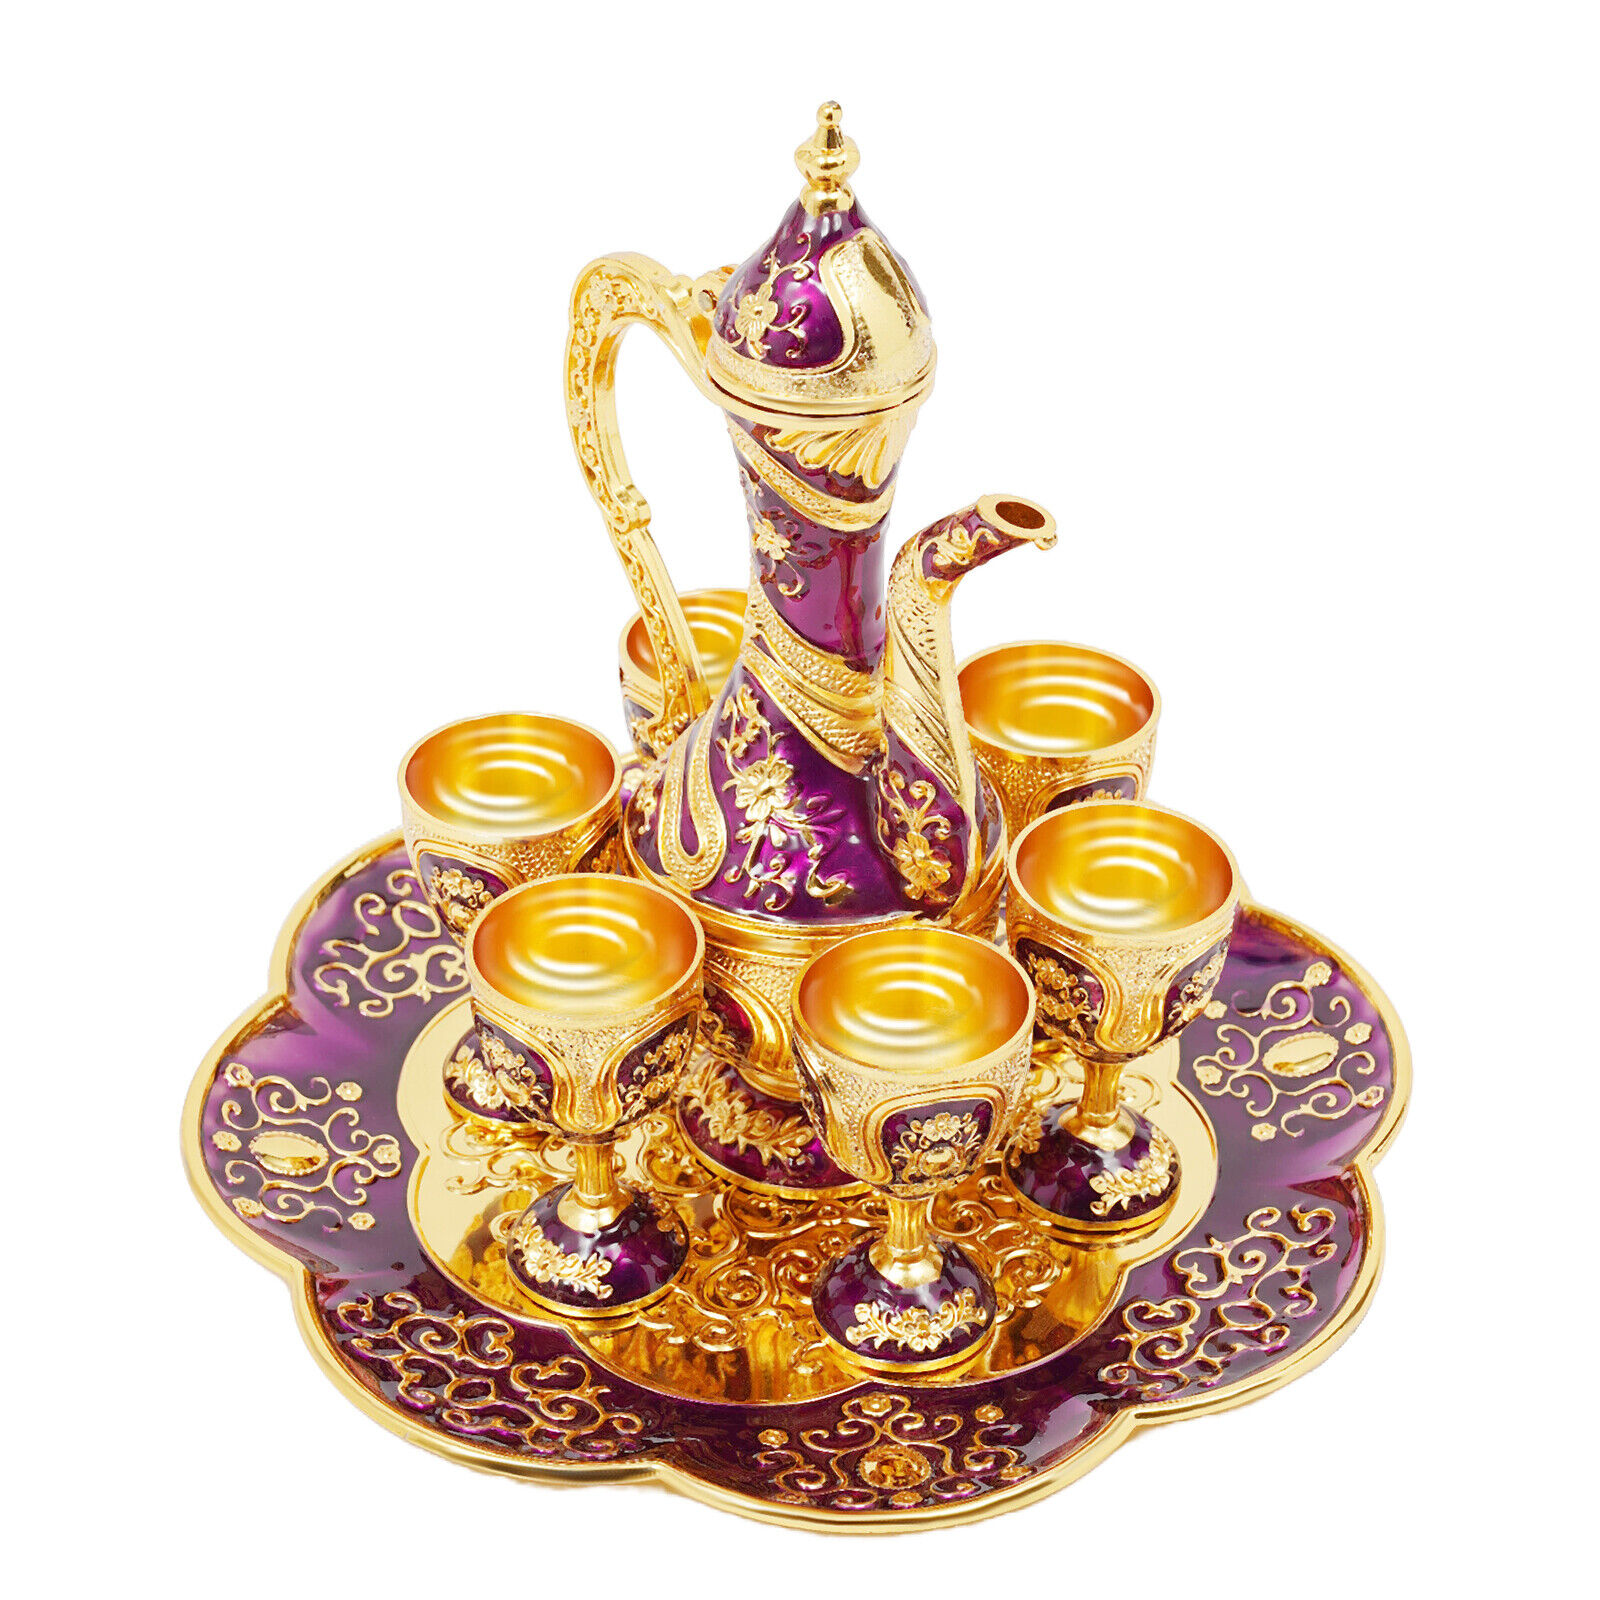 Turkish Tea Set, Vintage Turkish Teapot Set with 6 Coffee Cup and Tea Tray Decor